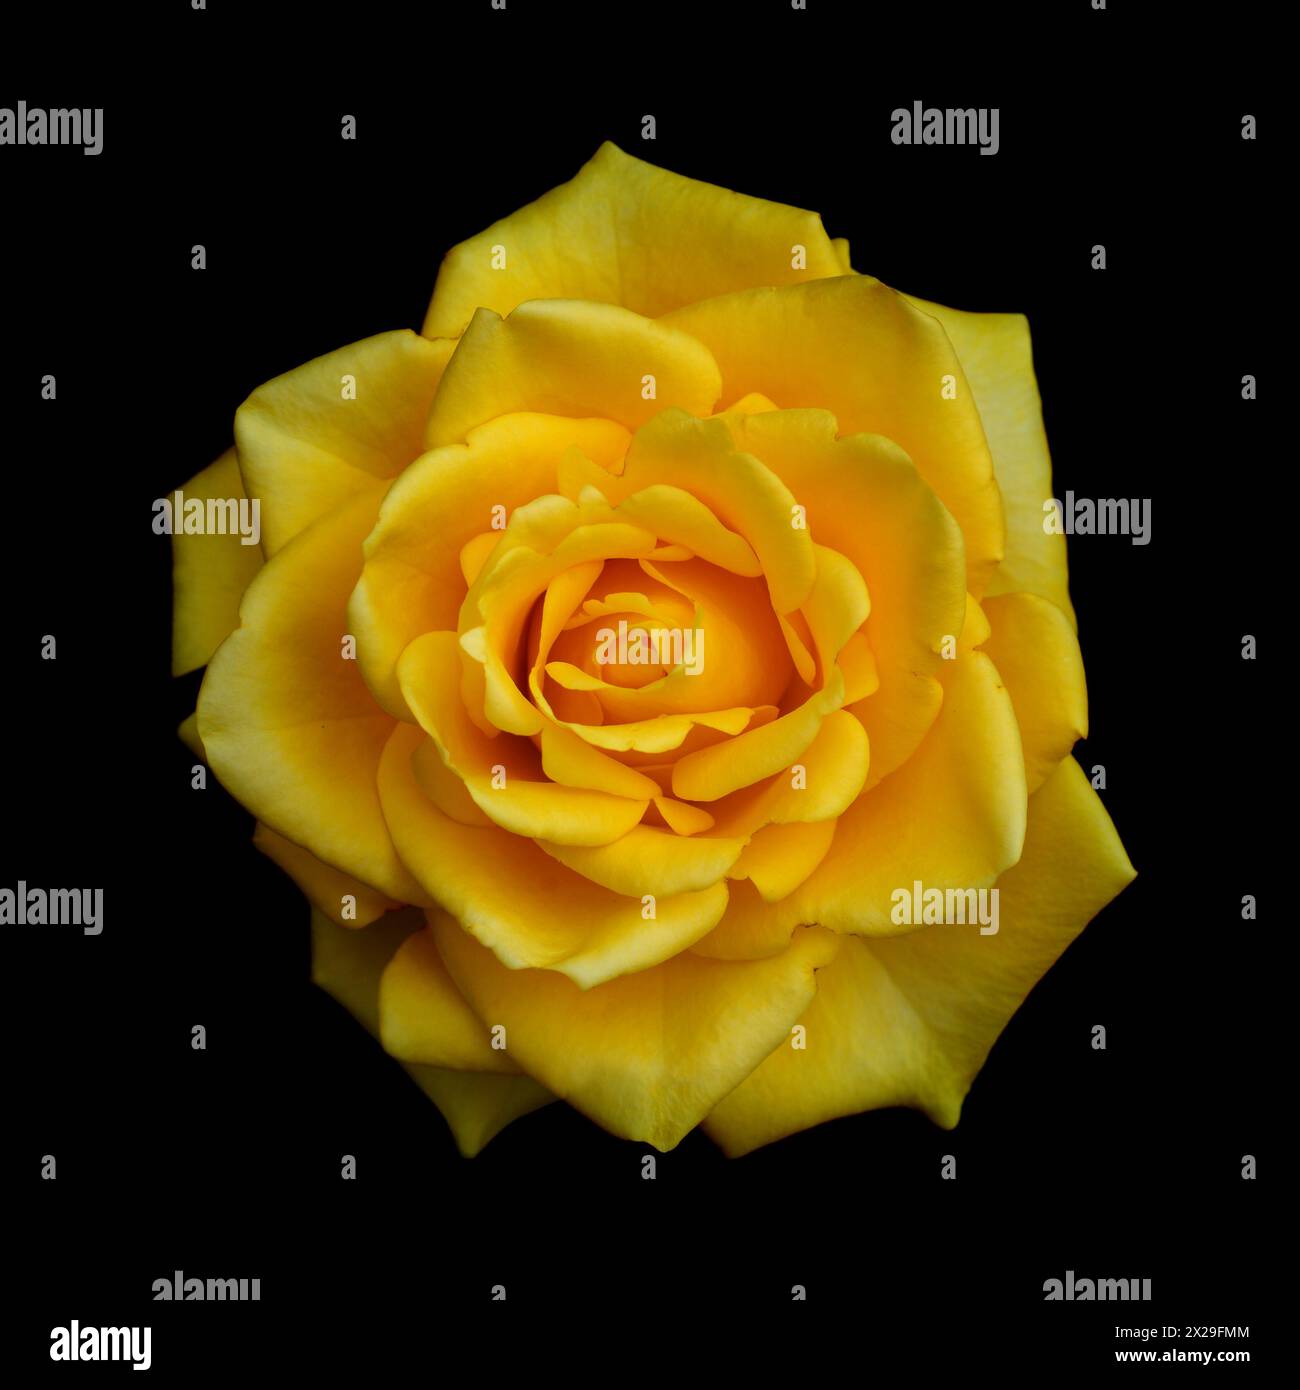 Yellow fully opened rose flower, isolated on black background Stock Photo